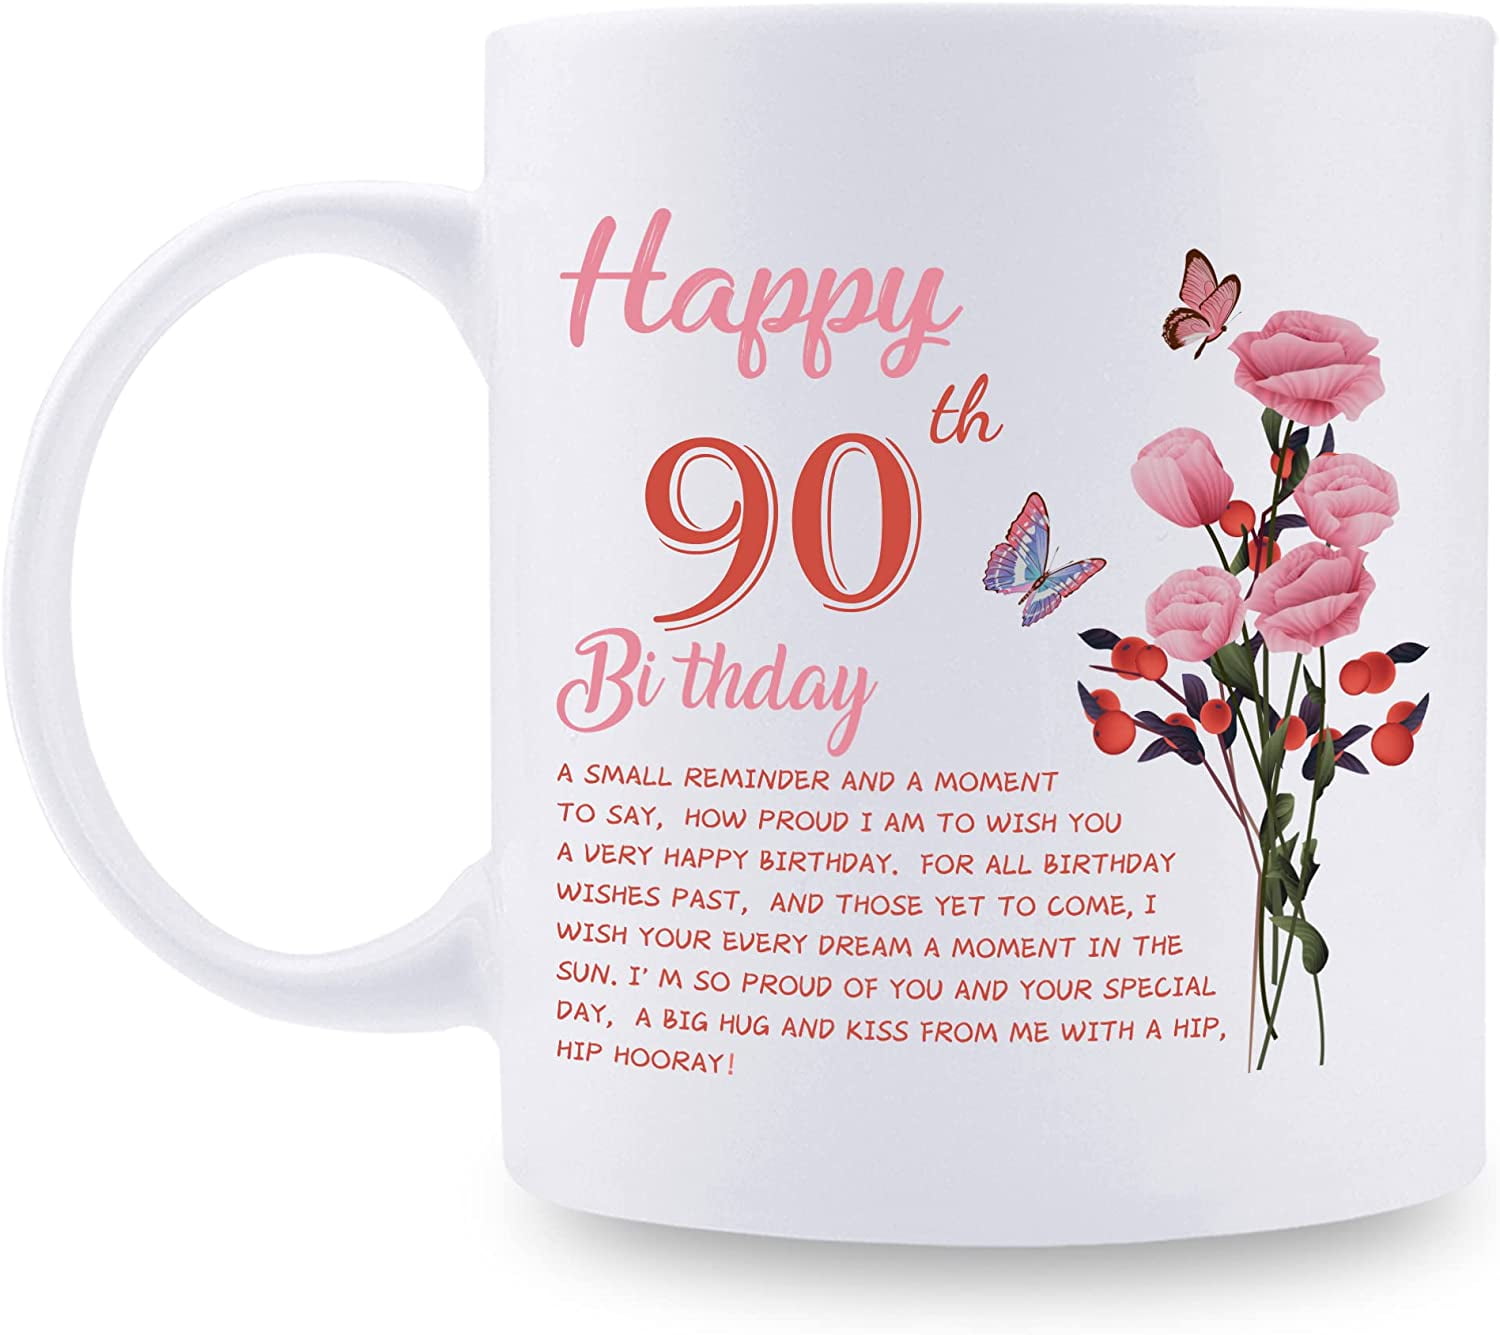 Best Mom Ever Coffee Cup - 904 Custom